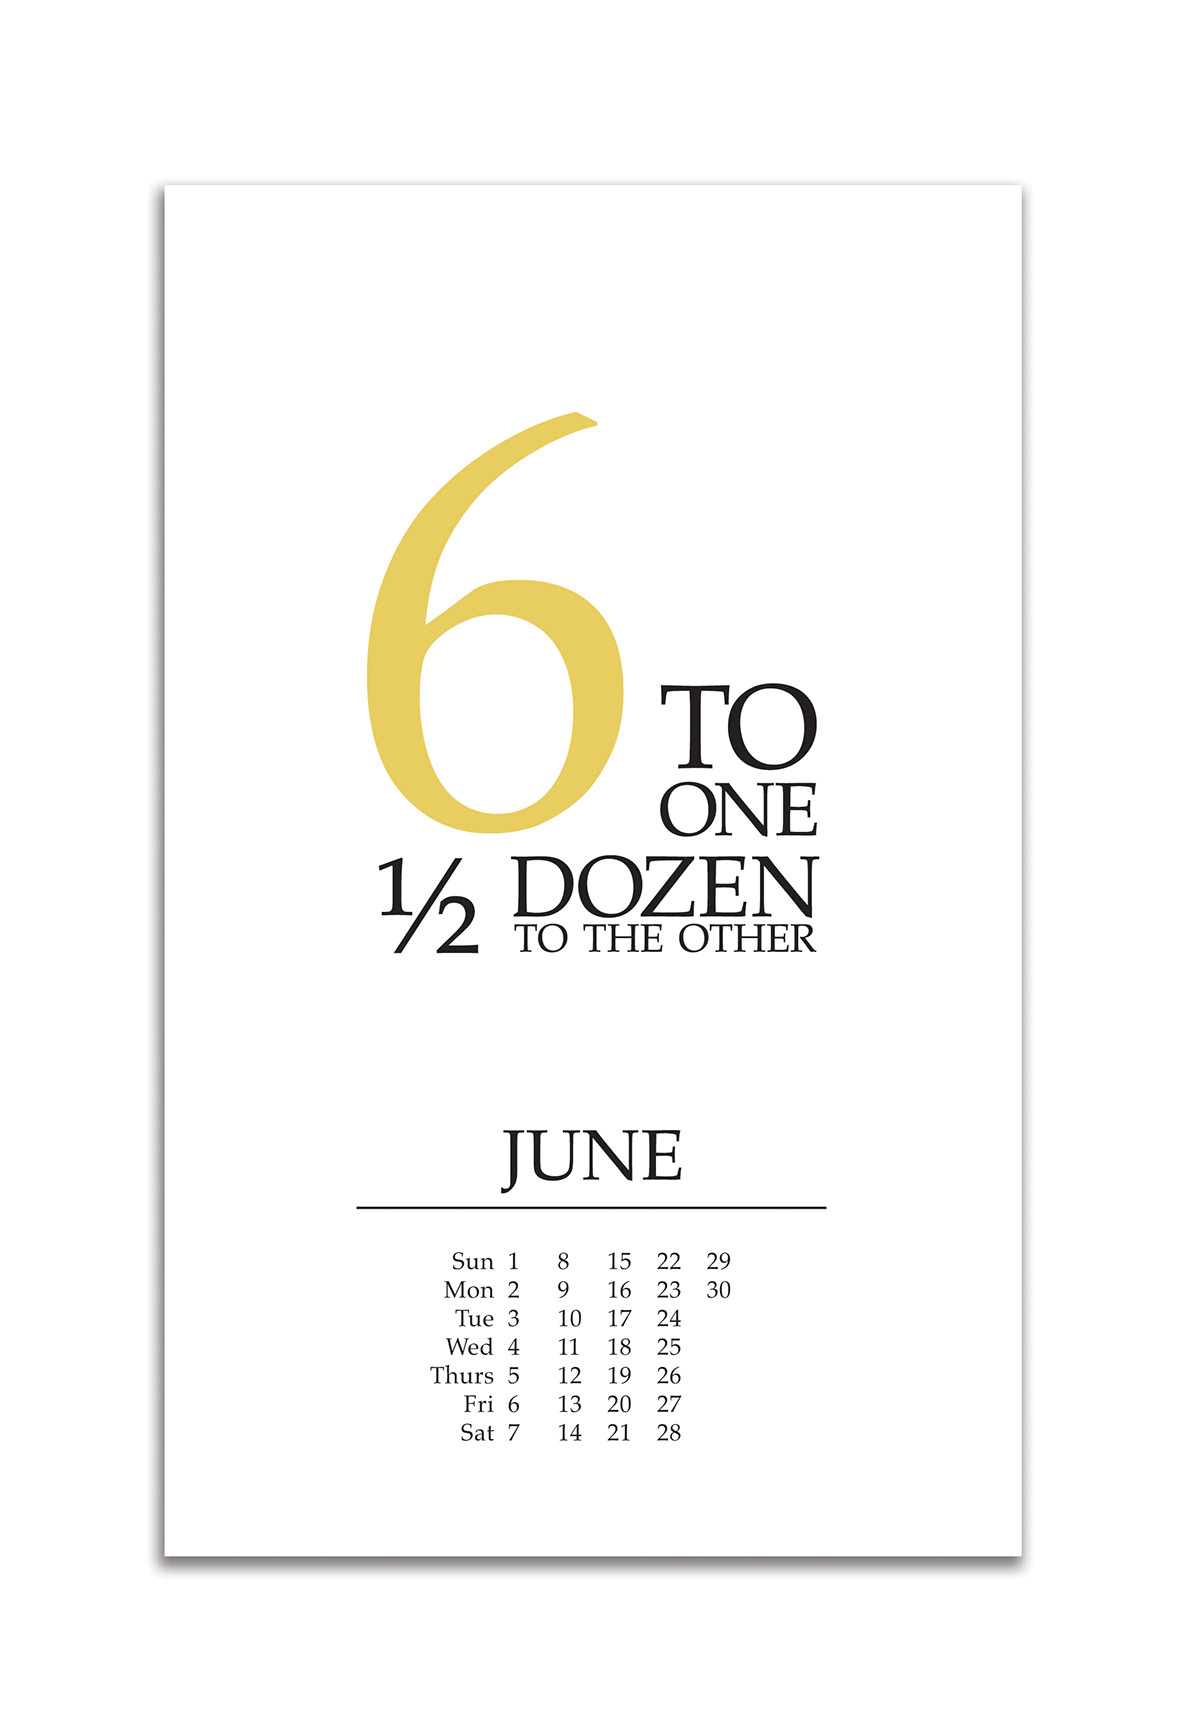 calendars Idioms 2014 calendars type calendars